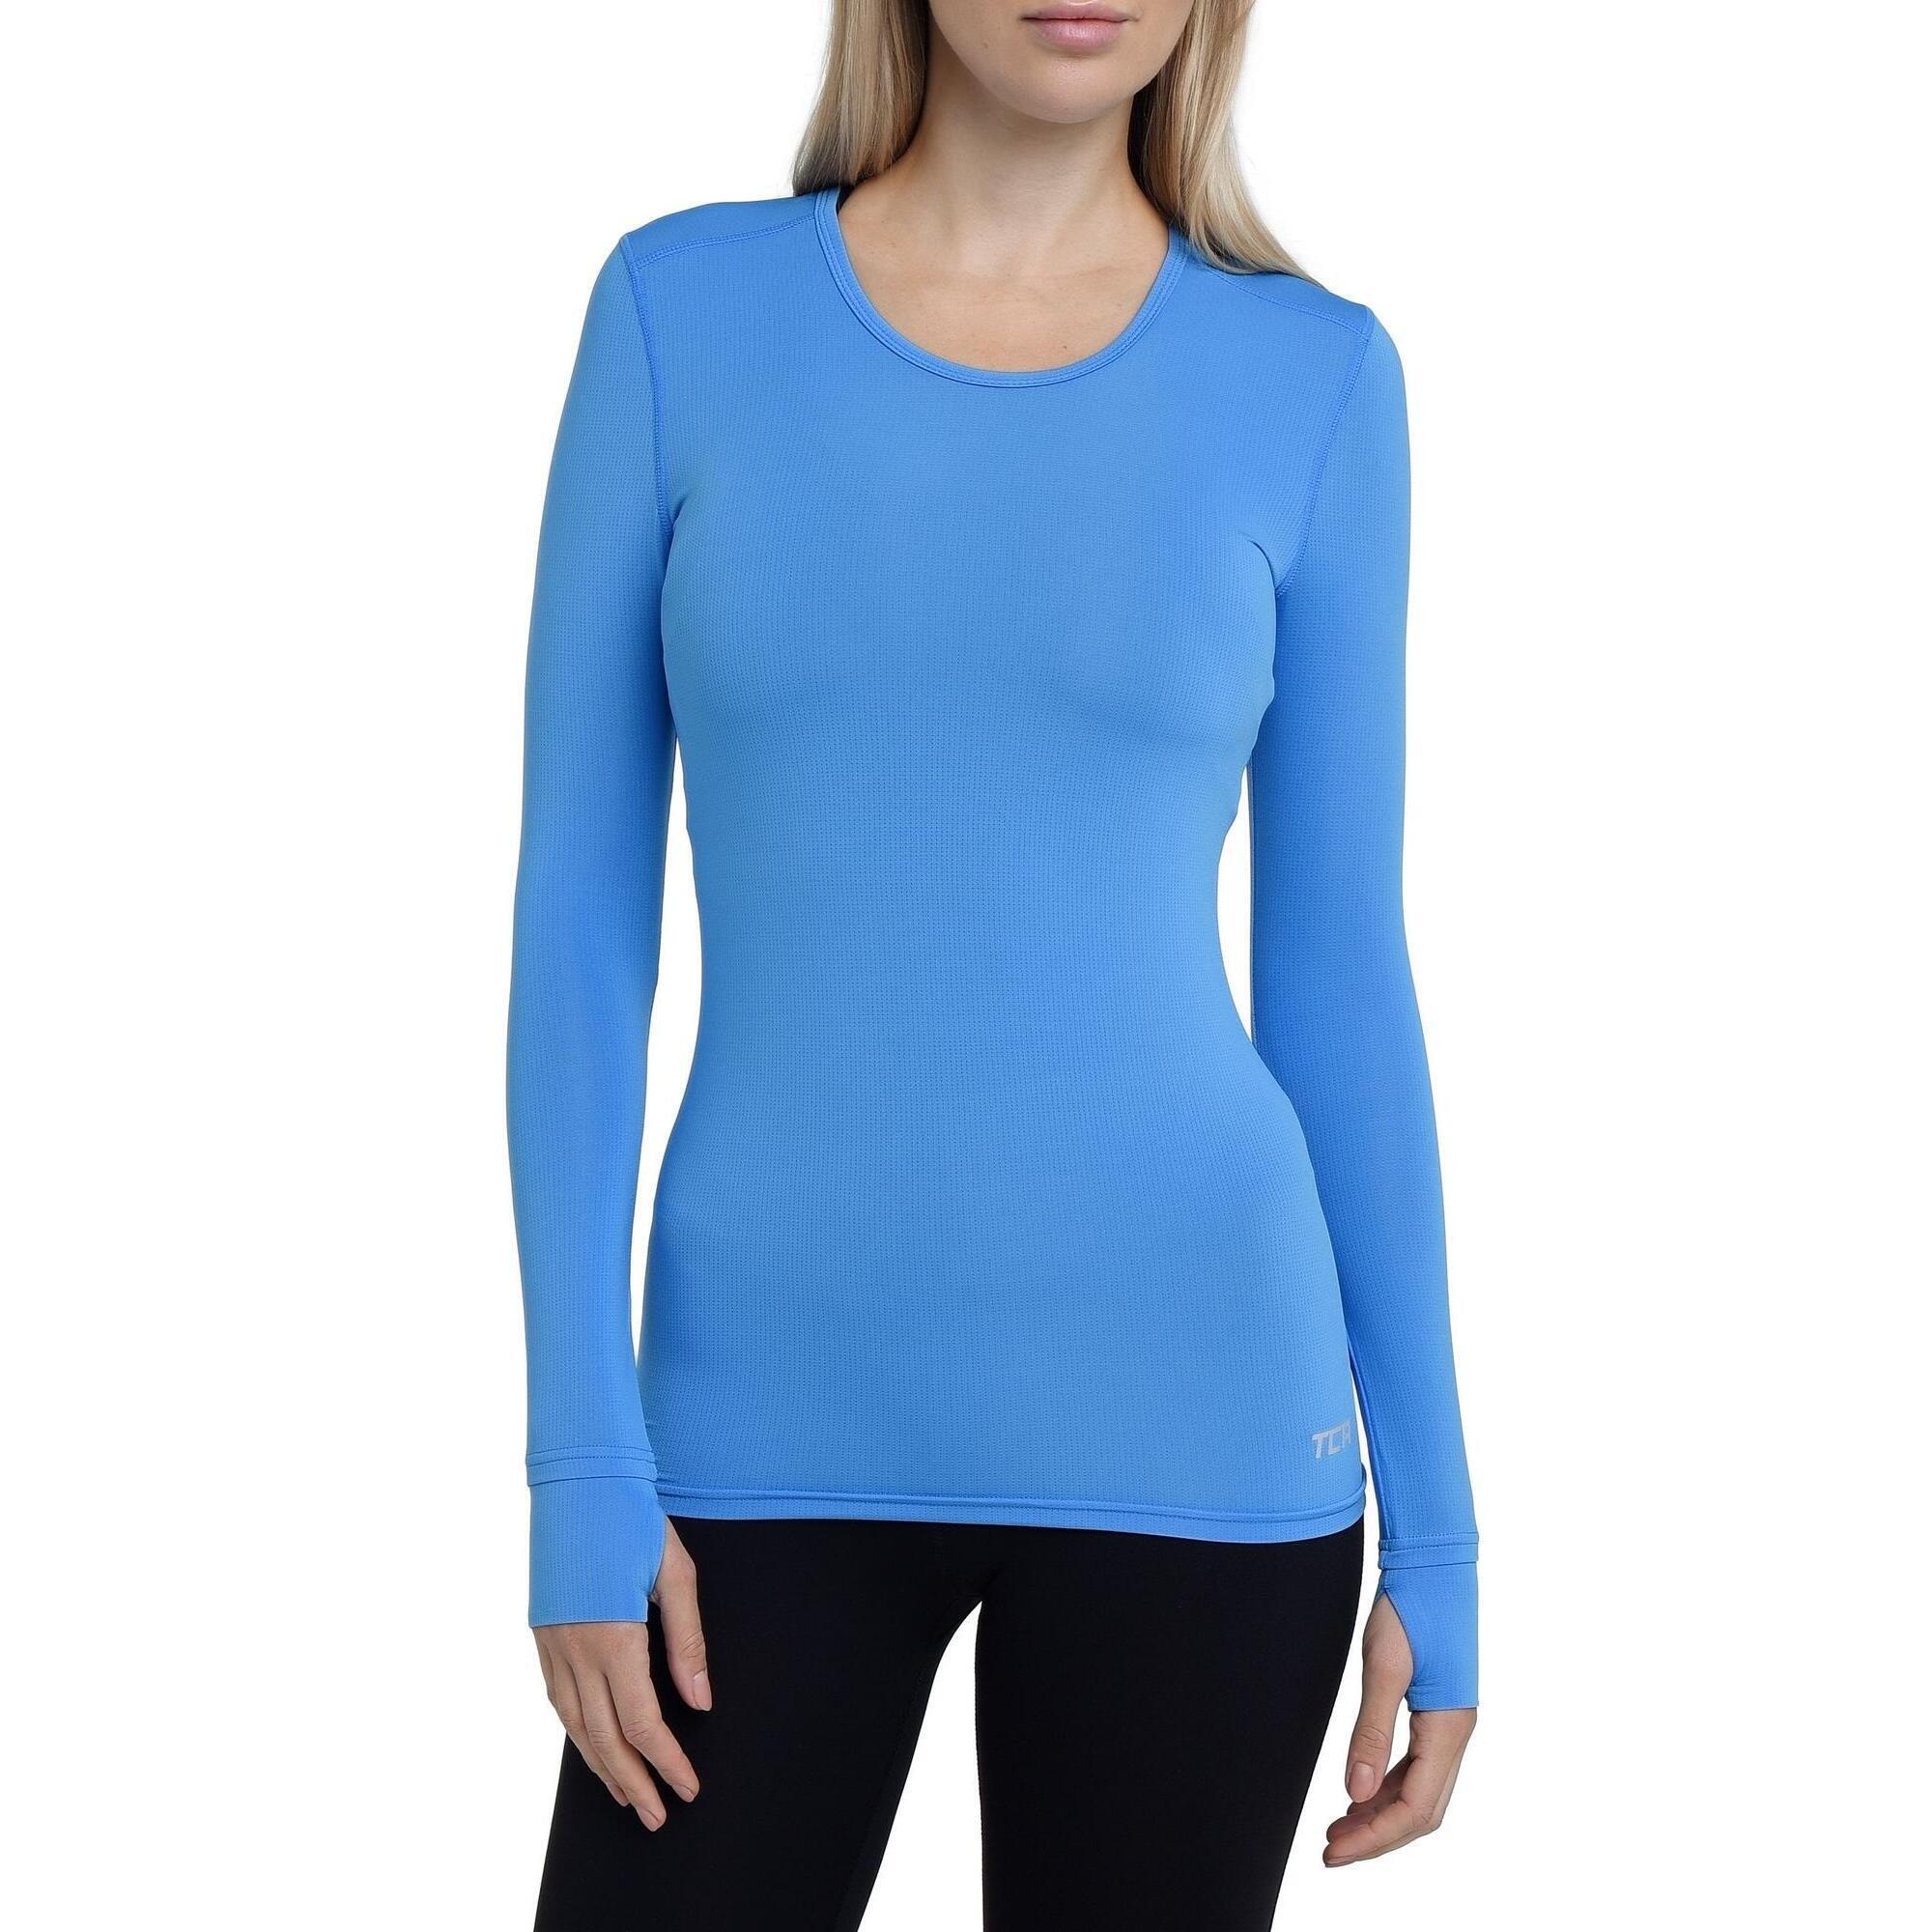 TCA Women's Stamina Running Top with Zip Pocket - Azure Blue